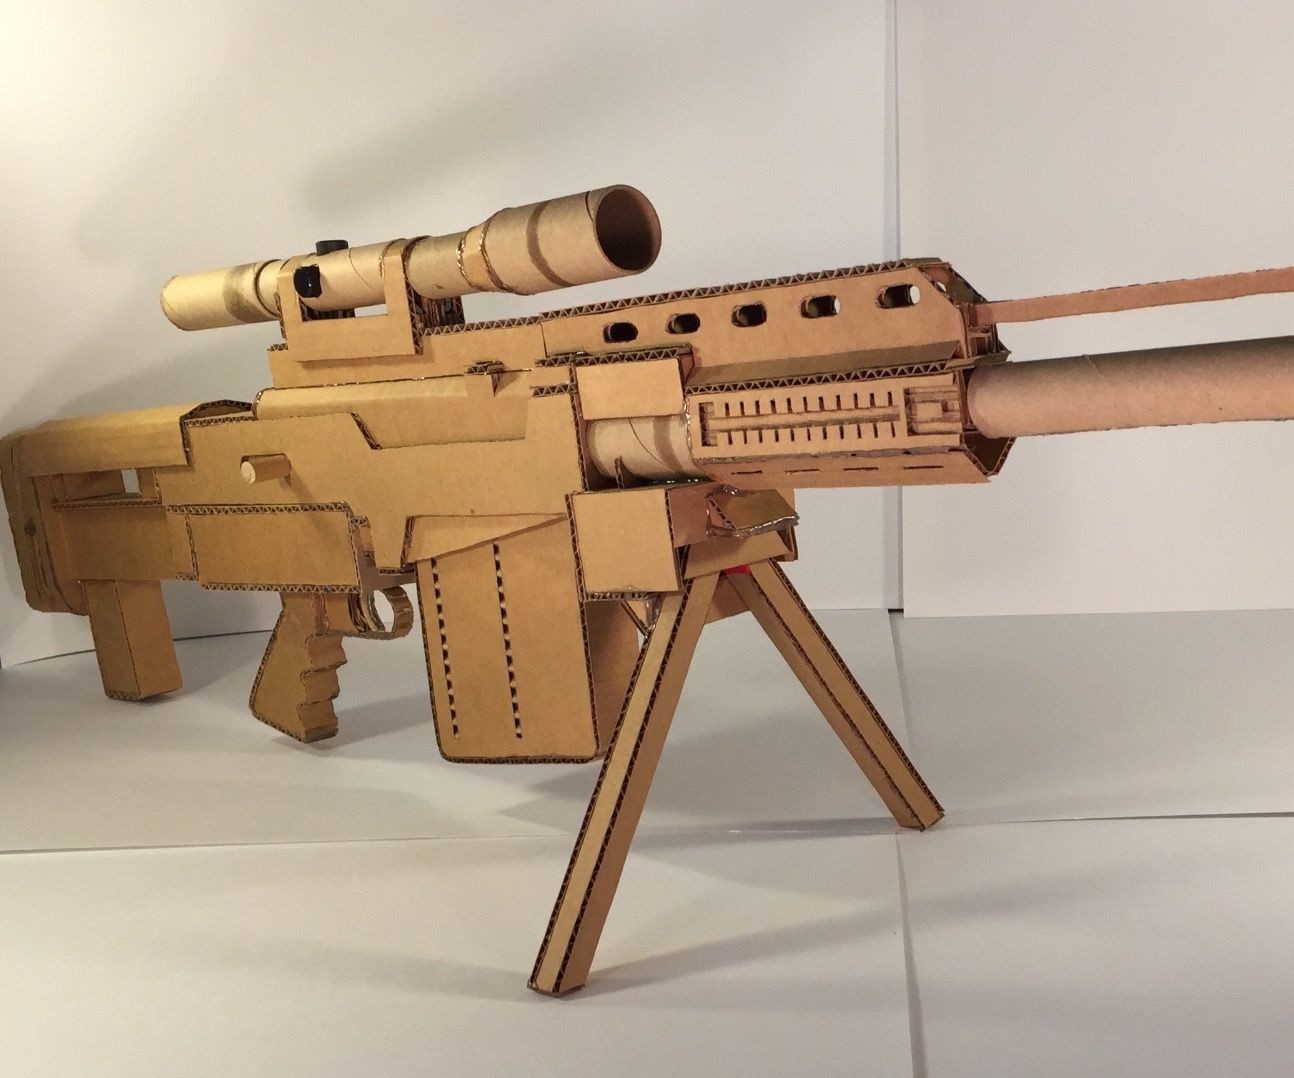 Papercraft Pistol Fully Functioning Cardboard as 50 Sniper Rifle